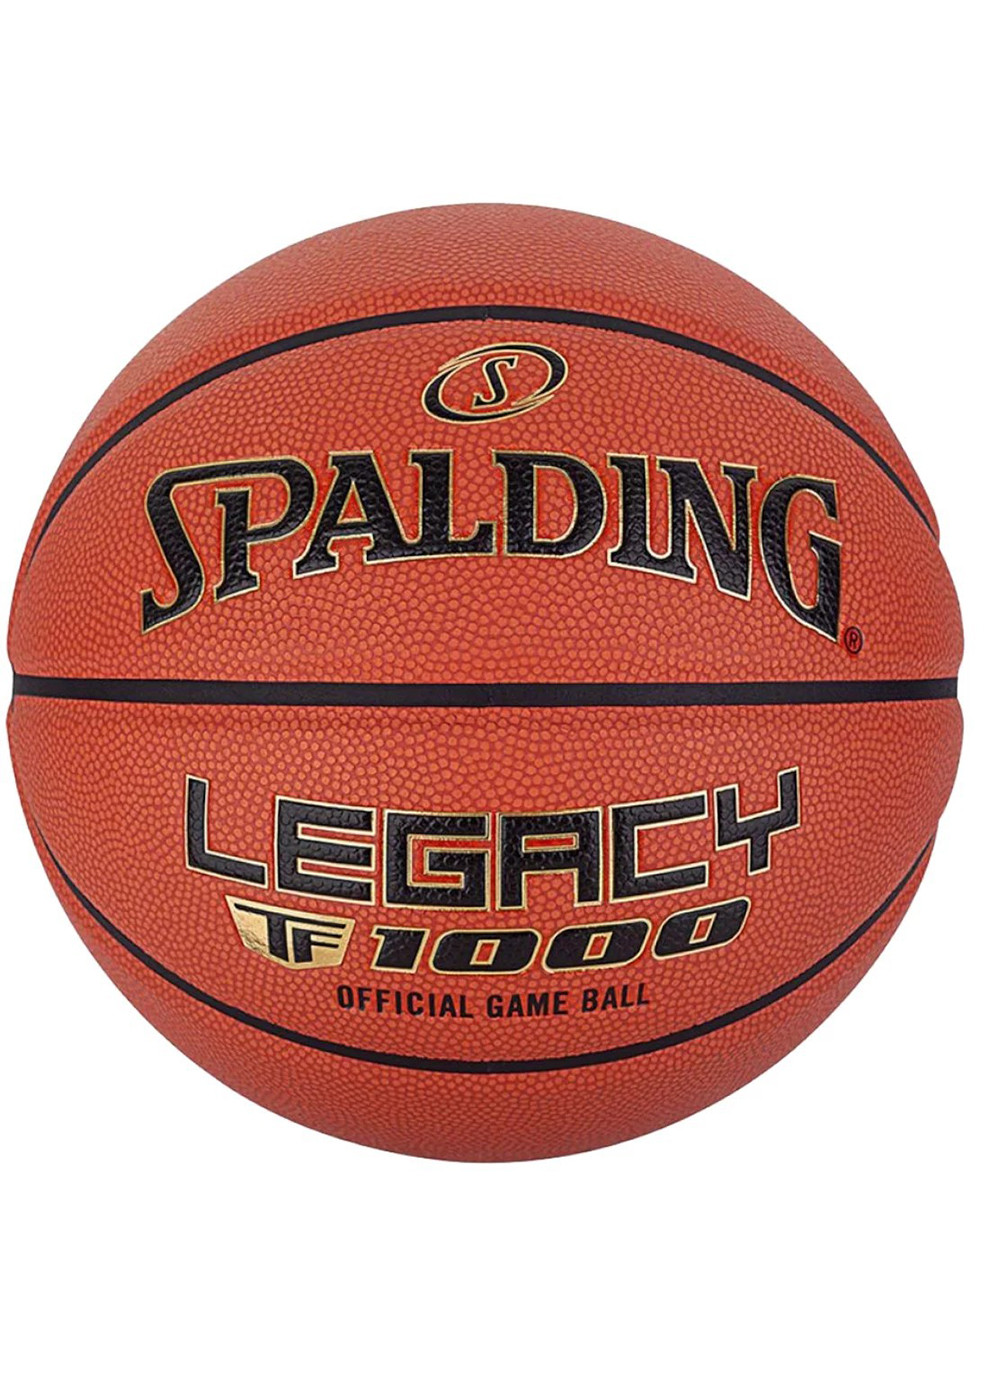 М'яч баскетбольний TF-1000 Legacy FIBA помаранчевий Spalding (260646269)